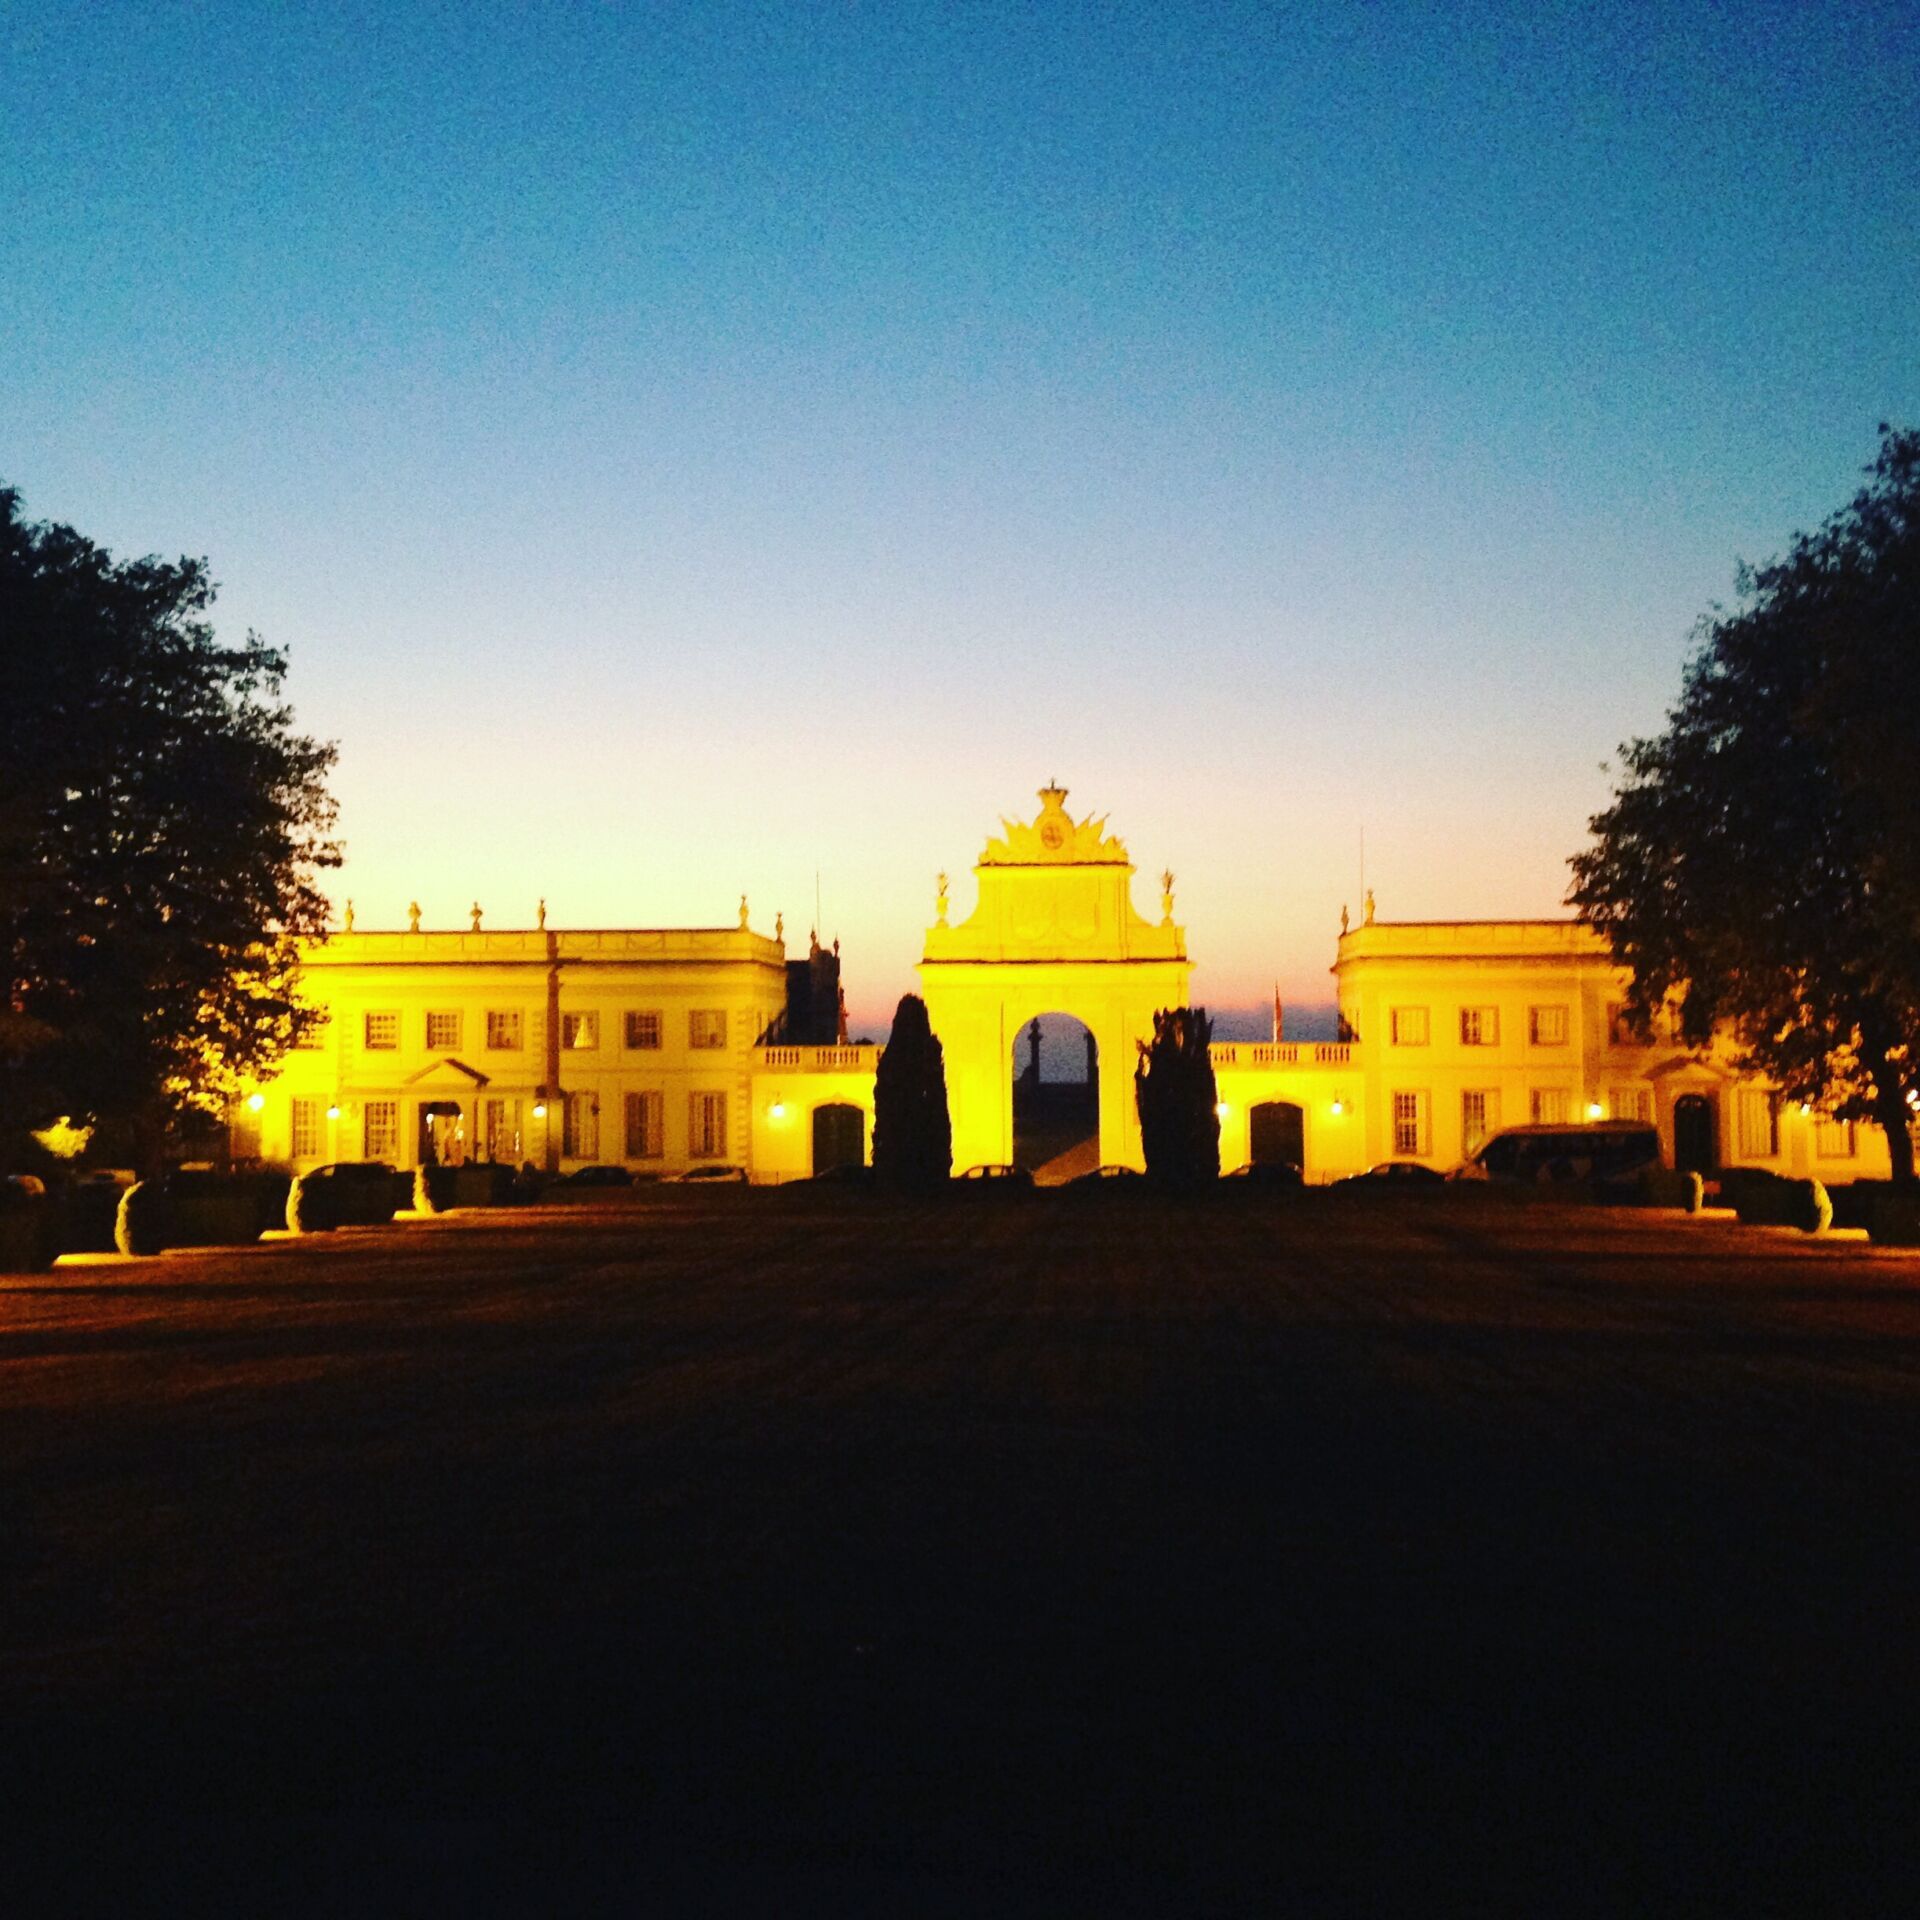 Palácio de Seteais by night